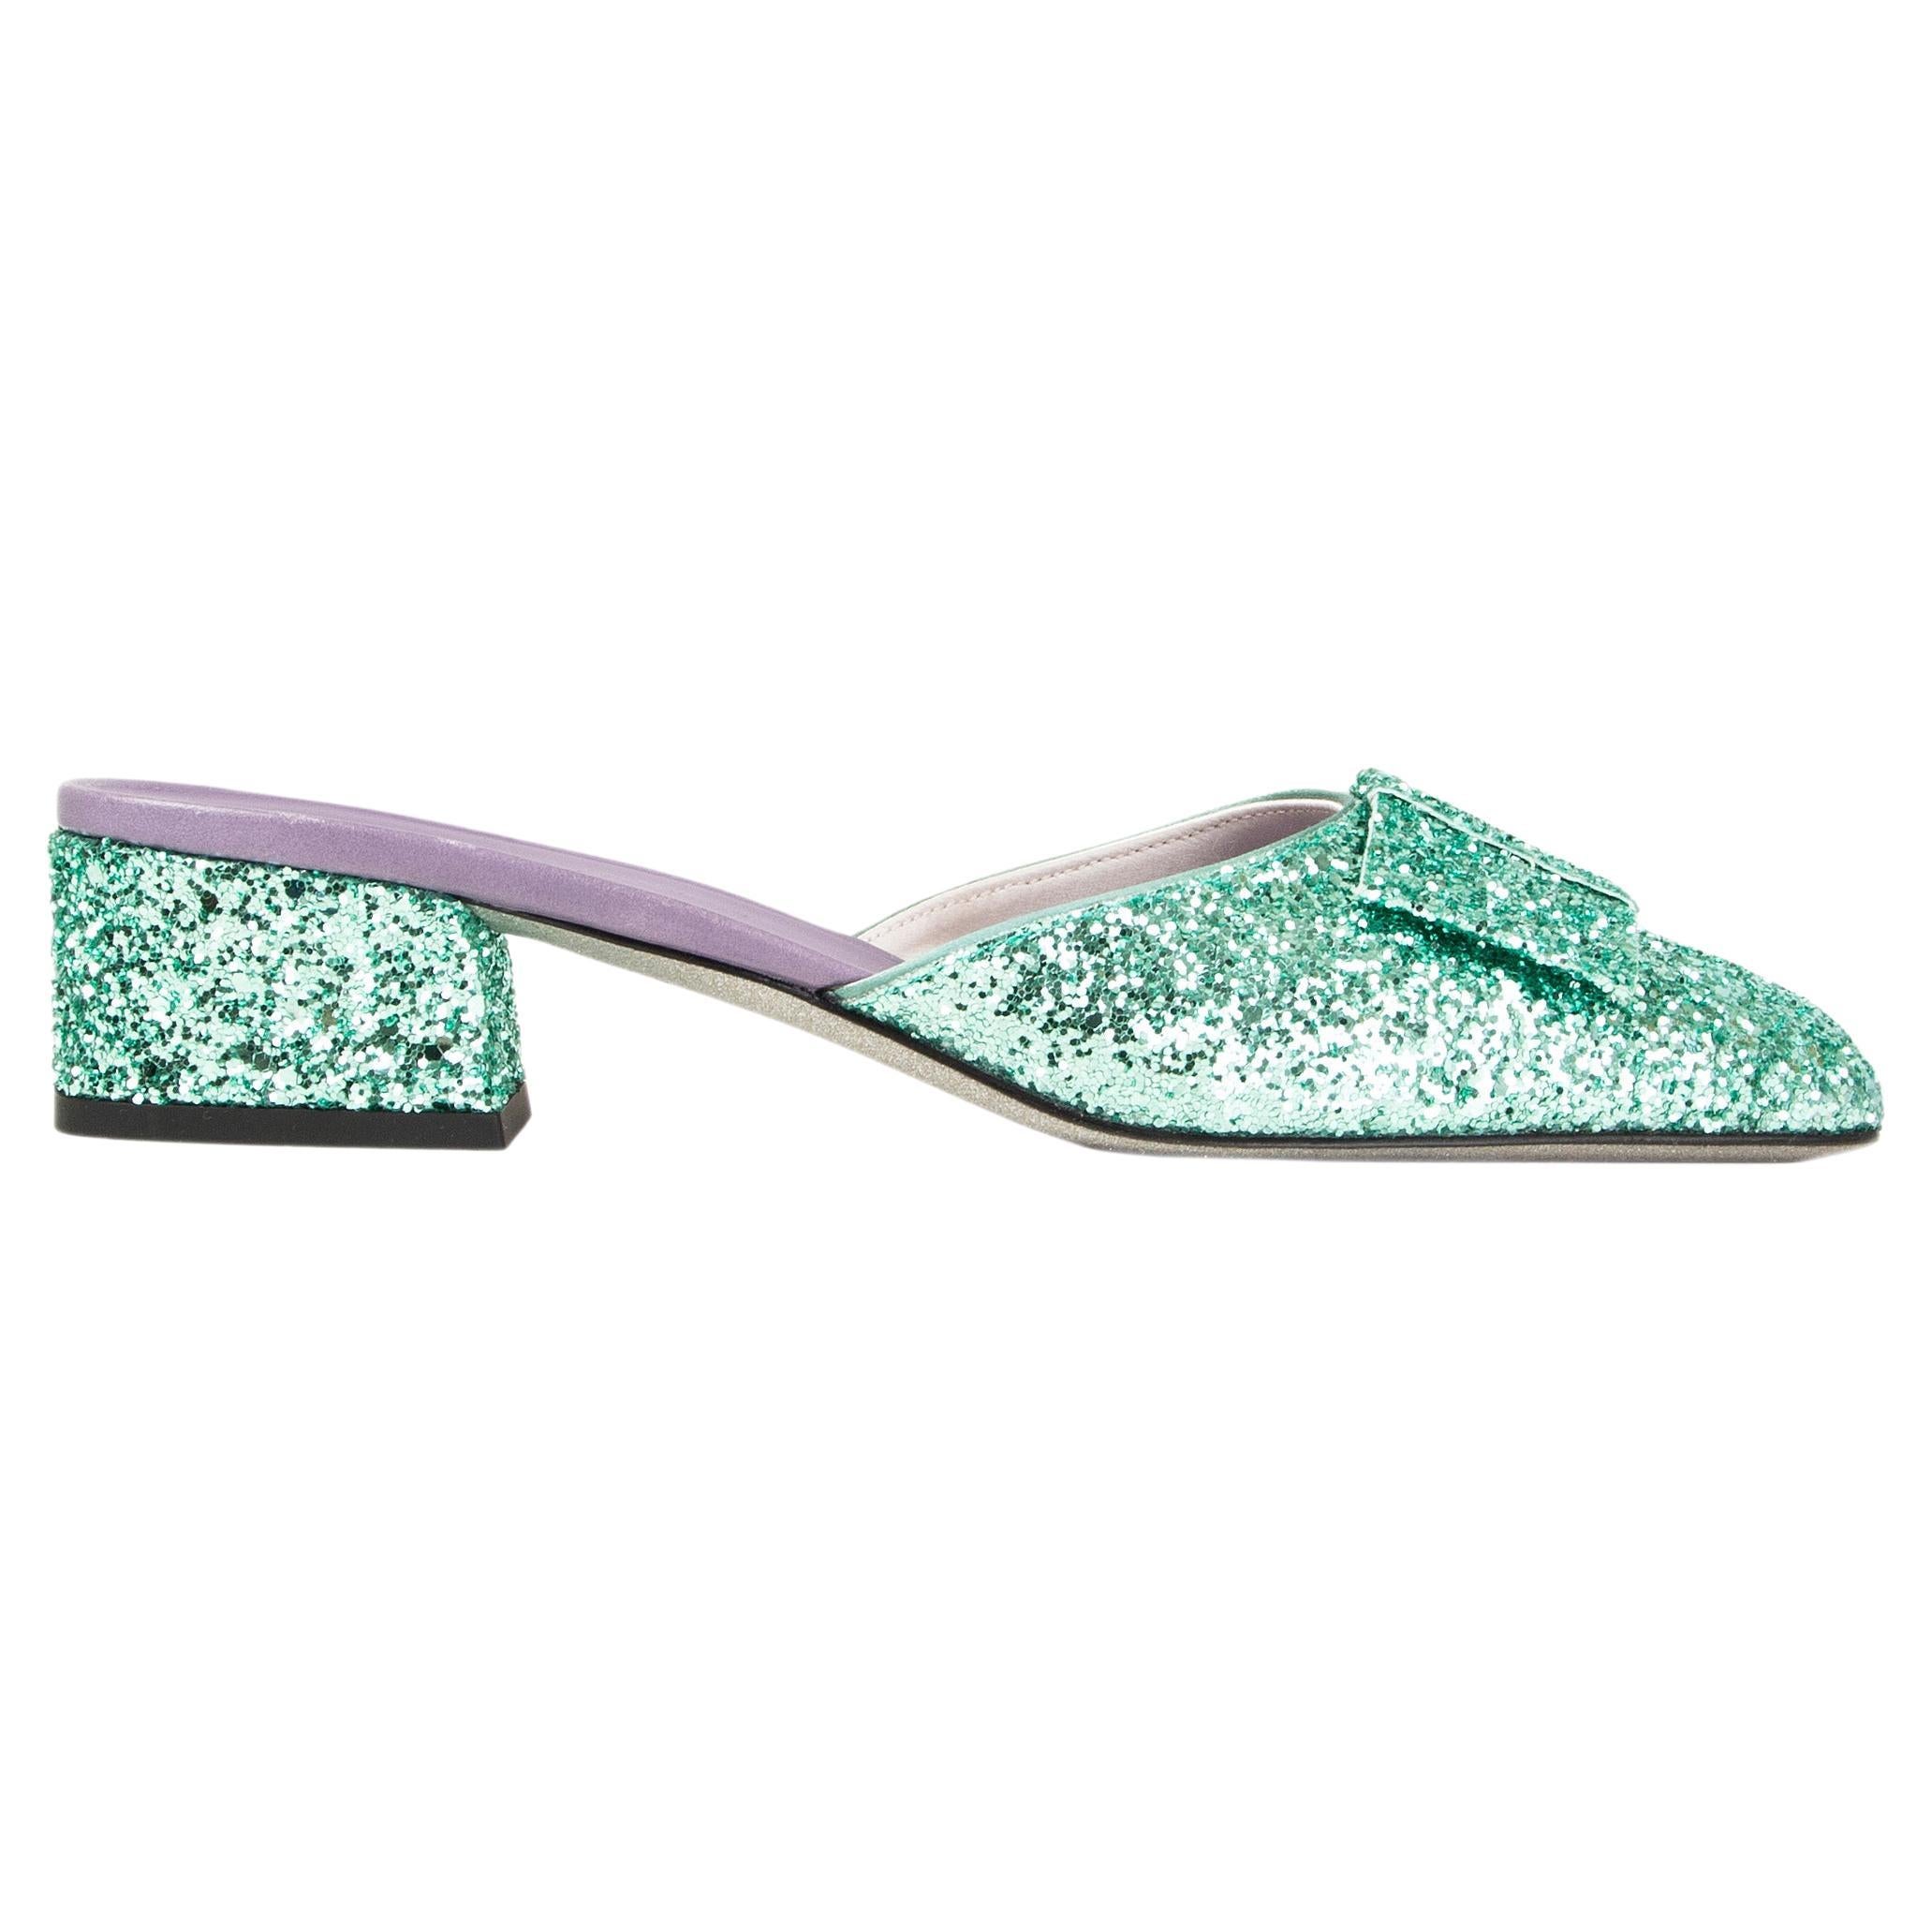 VICTORIA BECKHAM mint green GLITTER HARPER Mules Shoes 39.5 For Sale